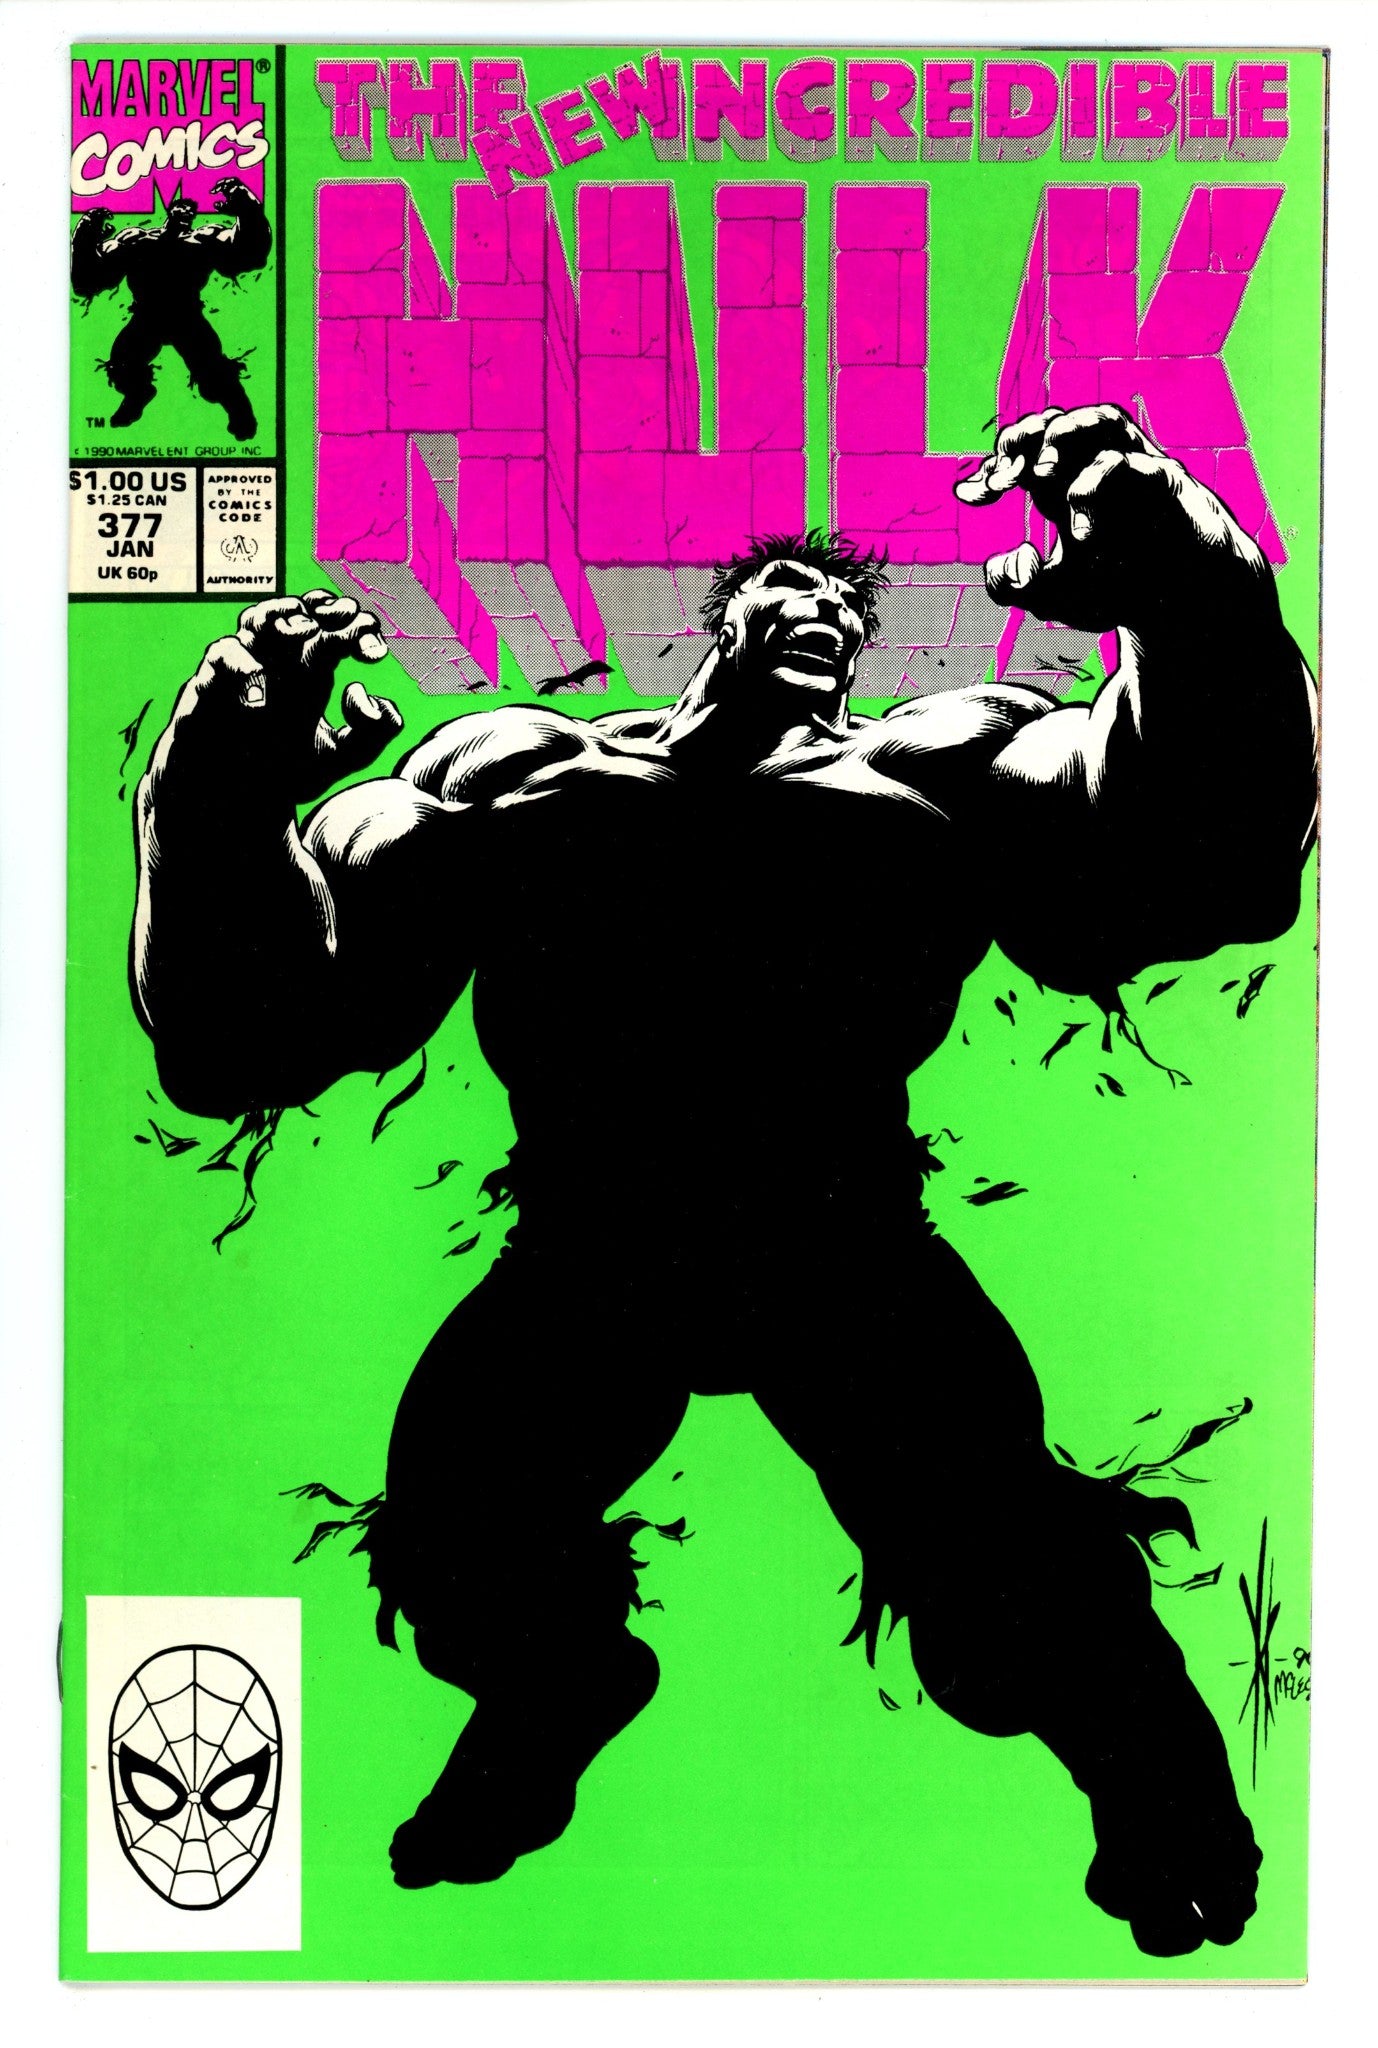 The Incredible Hulk Vol 1 377 VF (8.0) (1991) 